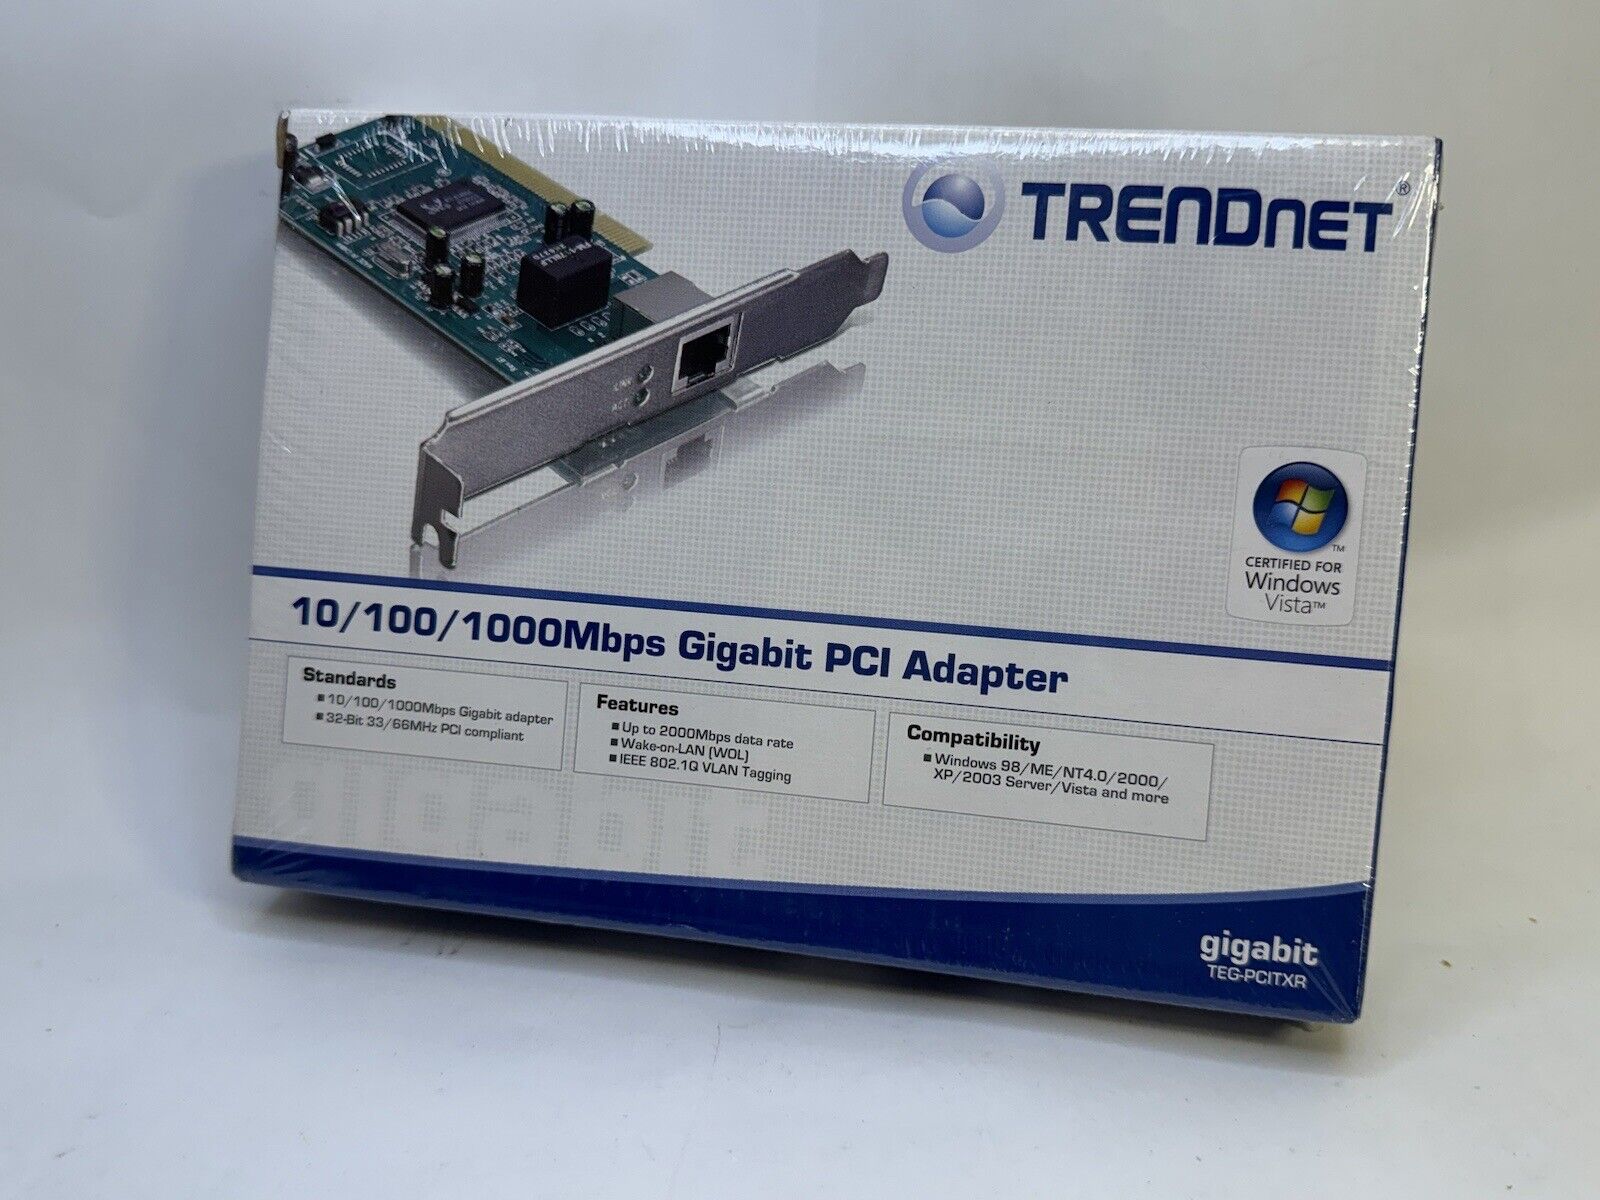 NEW TRENDnet 32-bit 10/100/1000Mbps Copper Gigabit PCI Adapter (TEG-PCITXR)